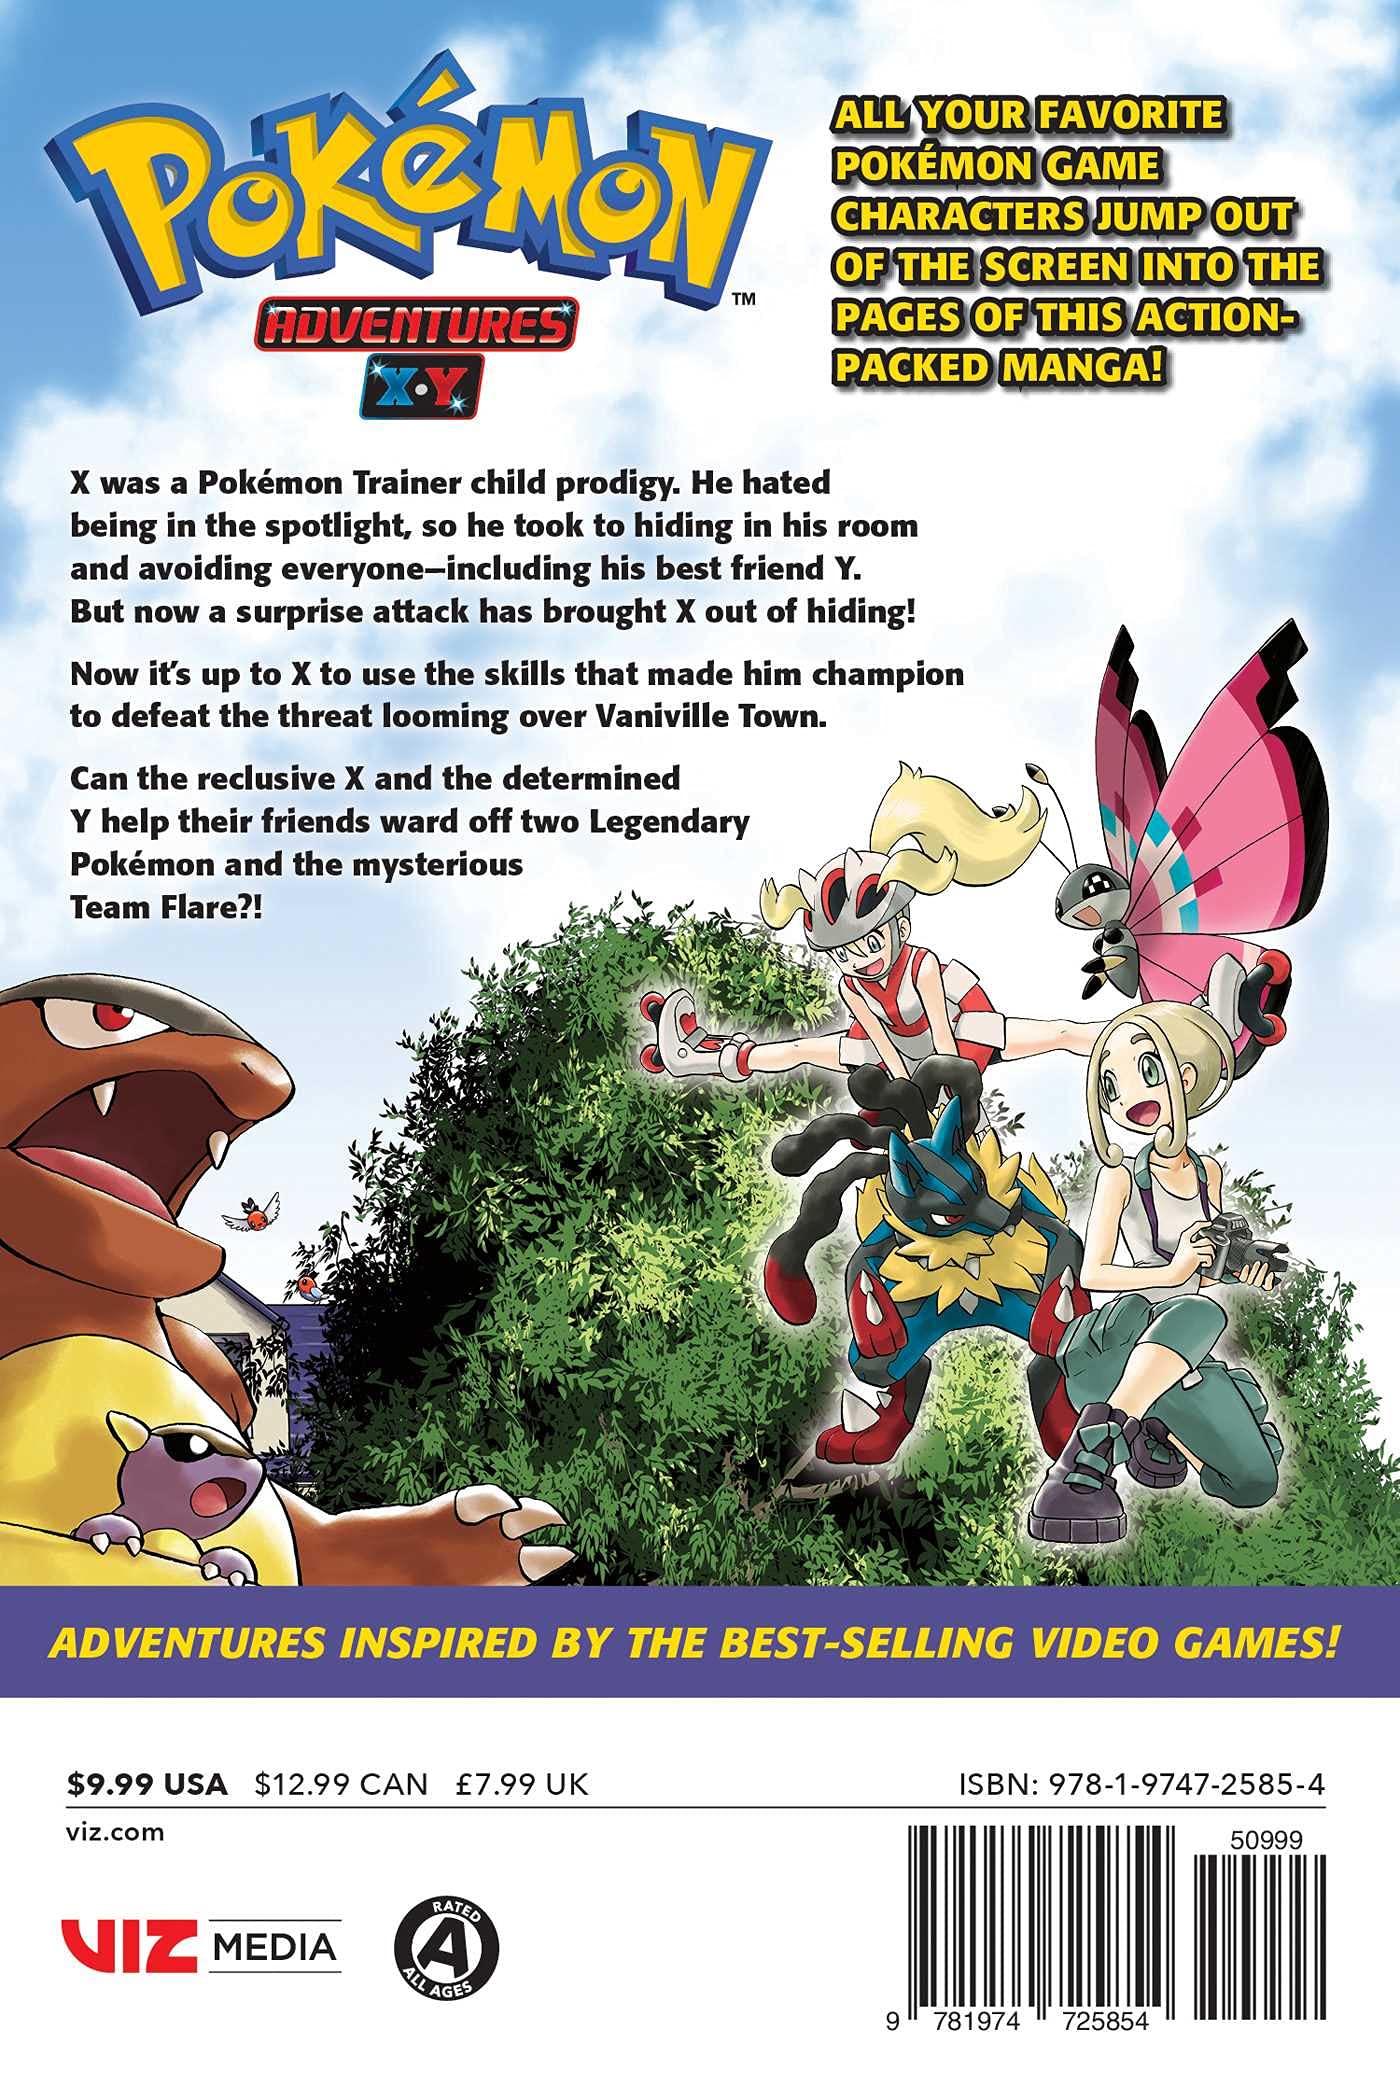 Pokémon Adventures Diamond & Pearl / Platinum Box Set - (Pokémon Manga Box  Sets) by Hidenori Kusaka (Mixed Media Product)